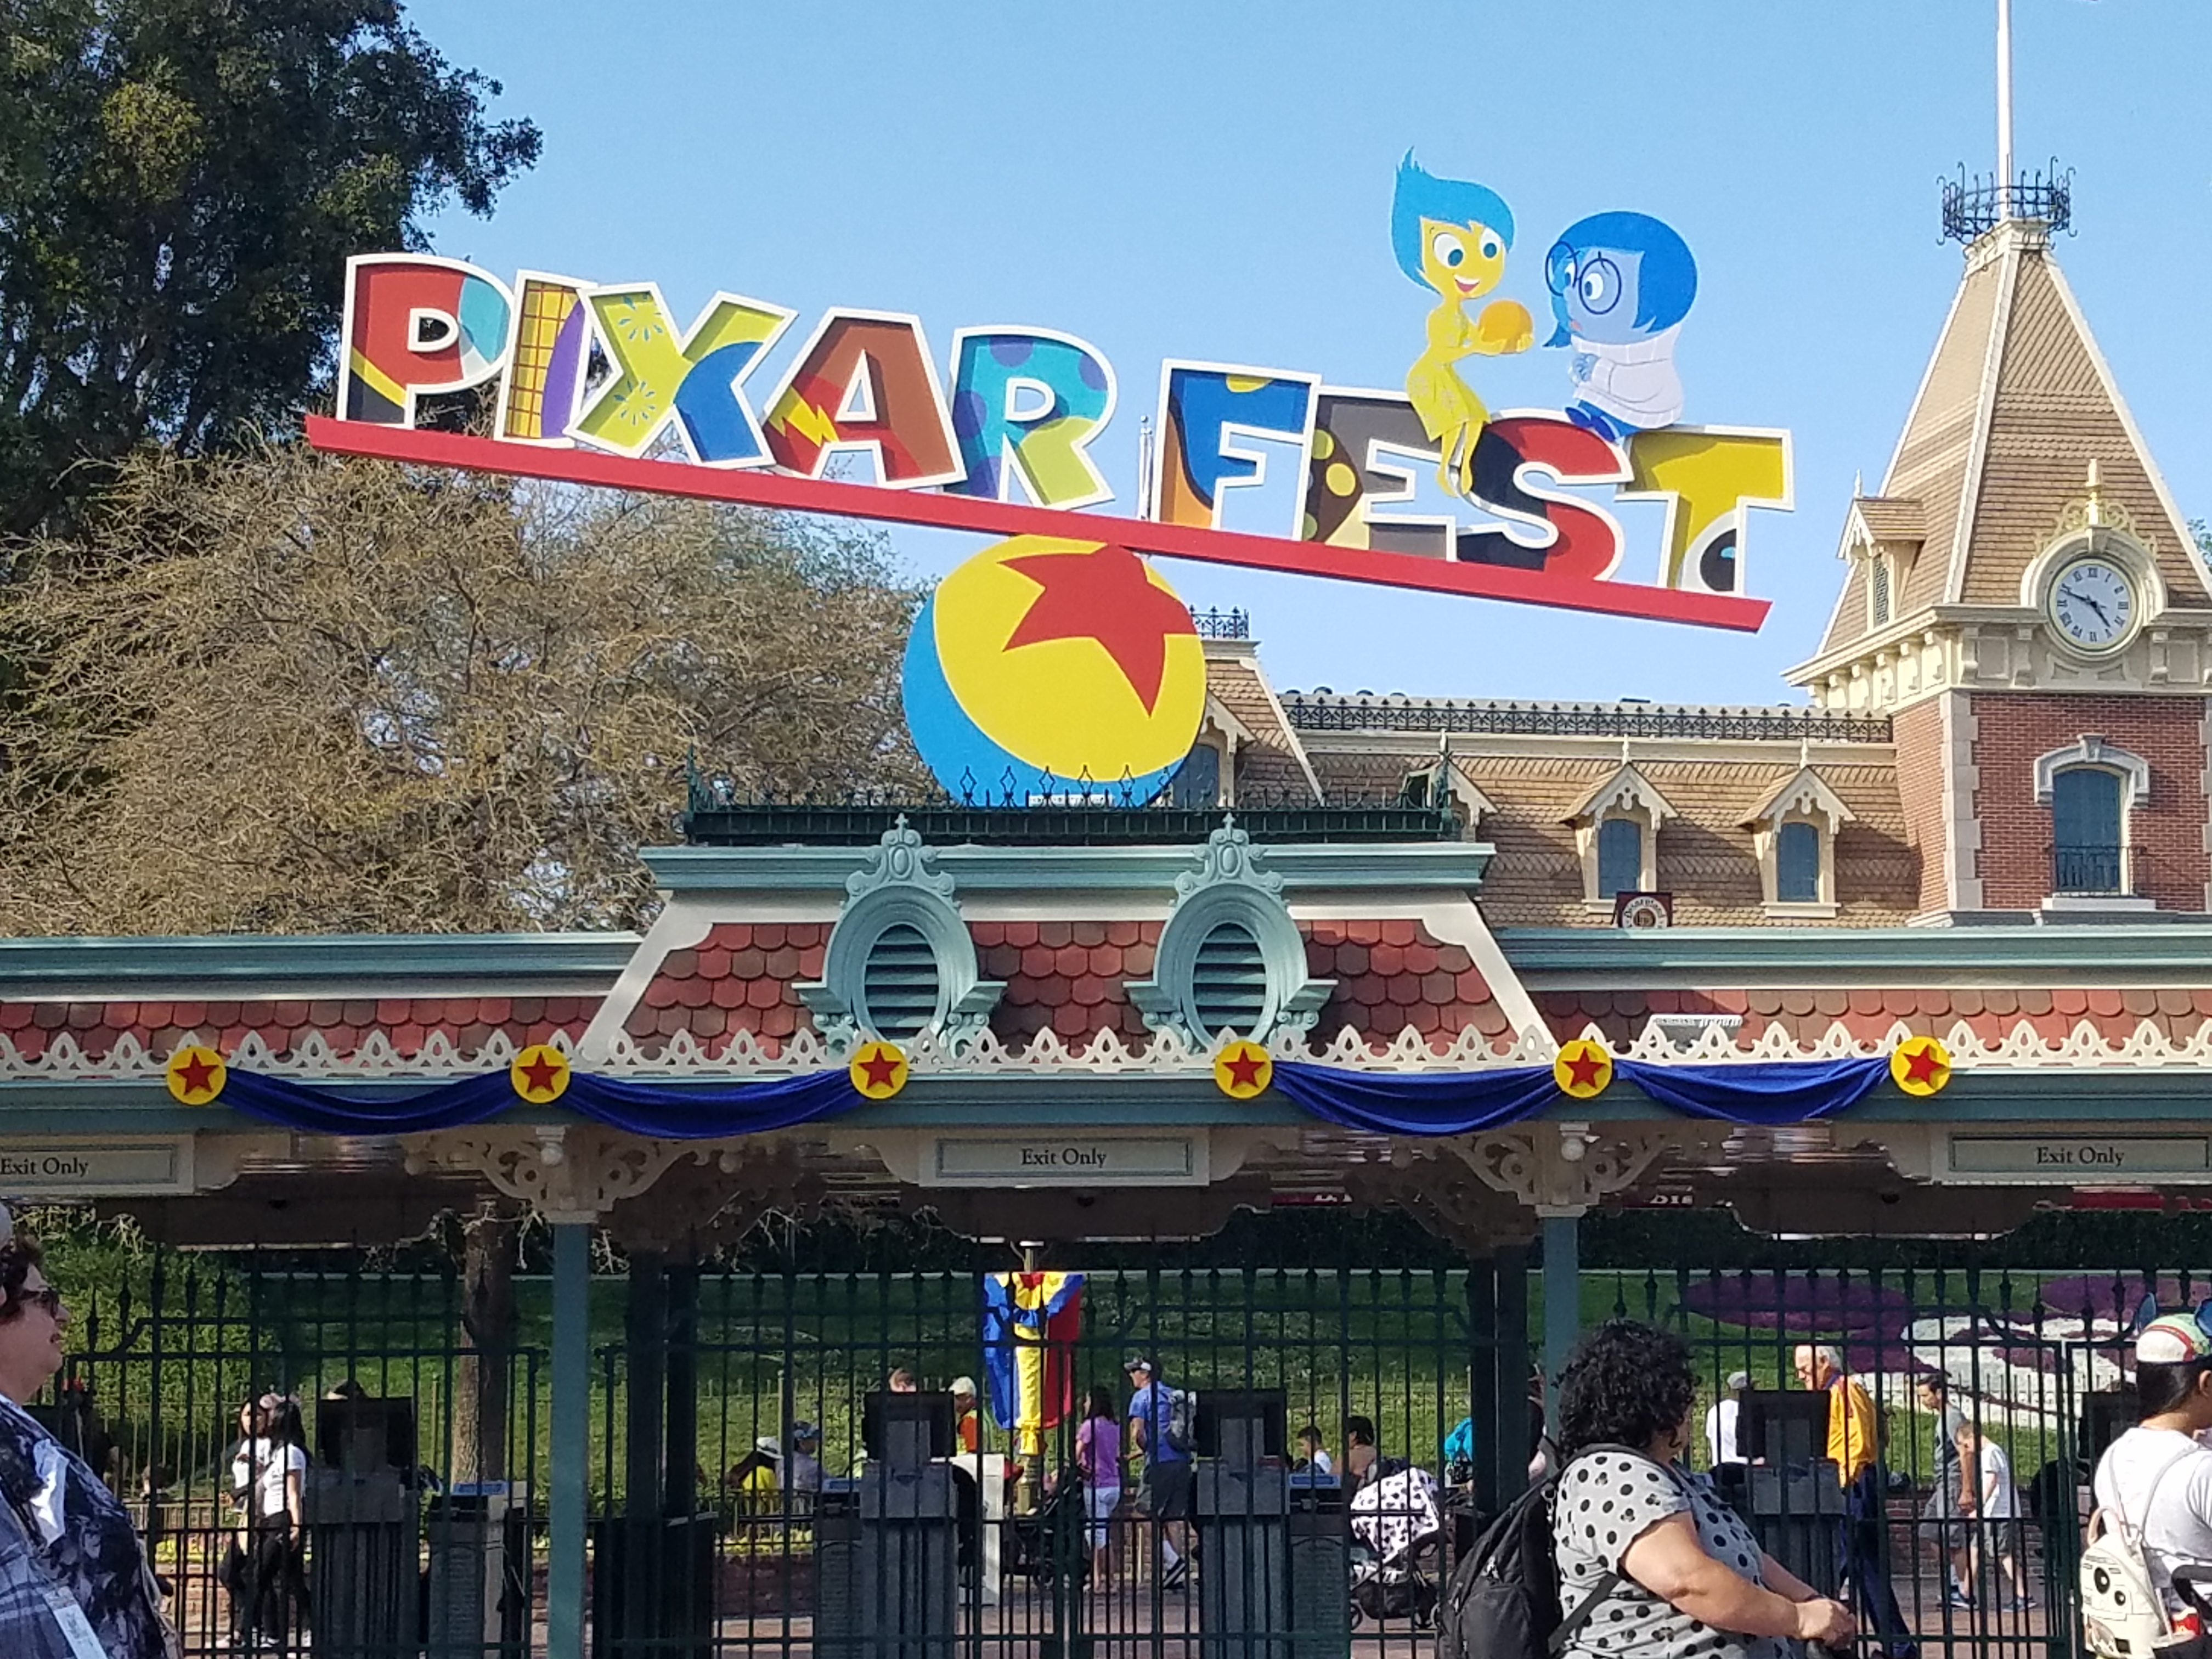 pixar fest sign at Disneyland